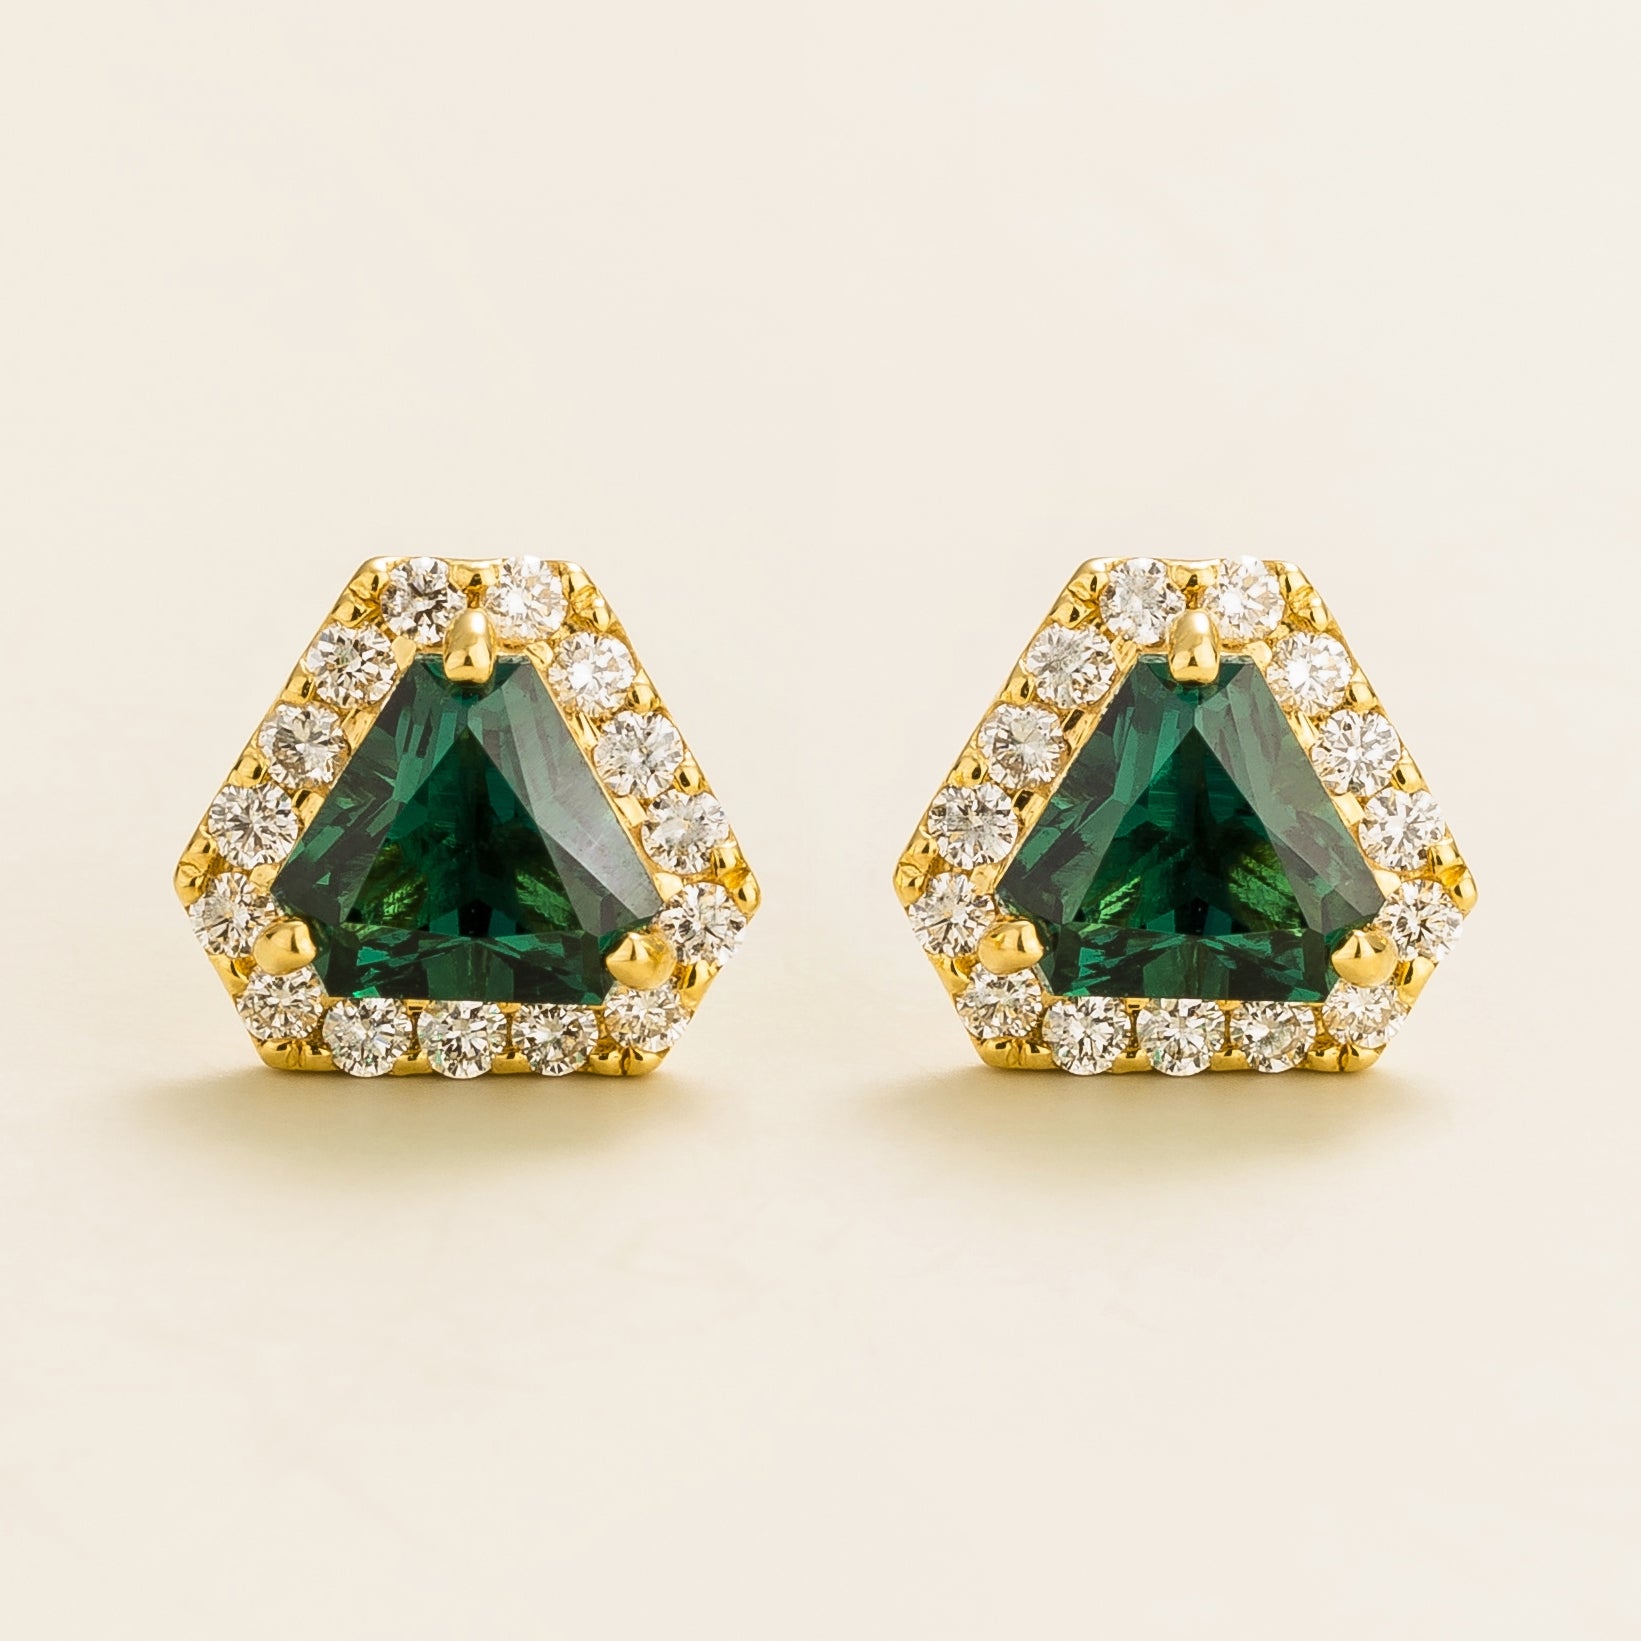 Diana Gold Earrings Emerald and Diamond Online Affordable Bespoke Jewellery UK